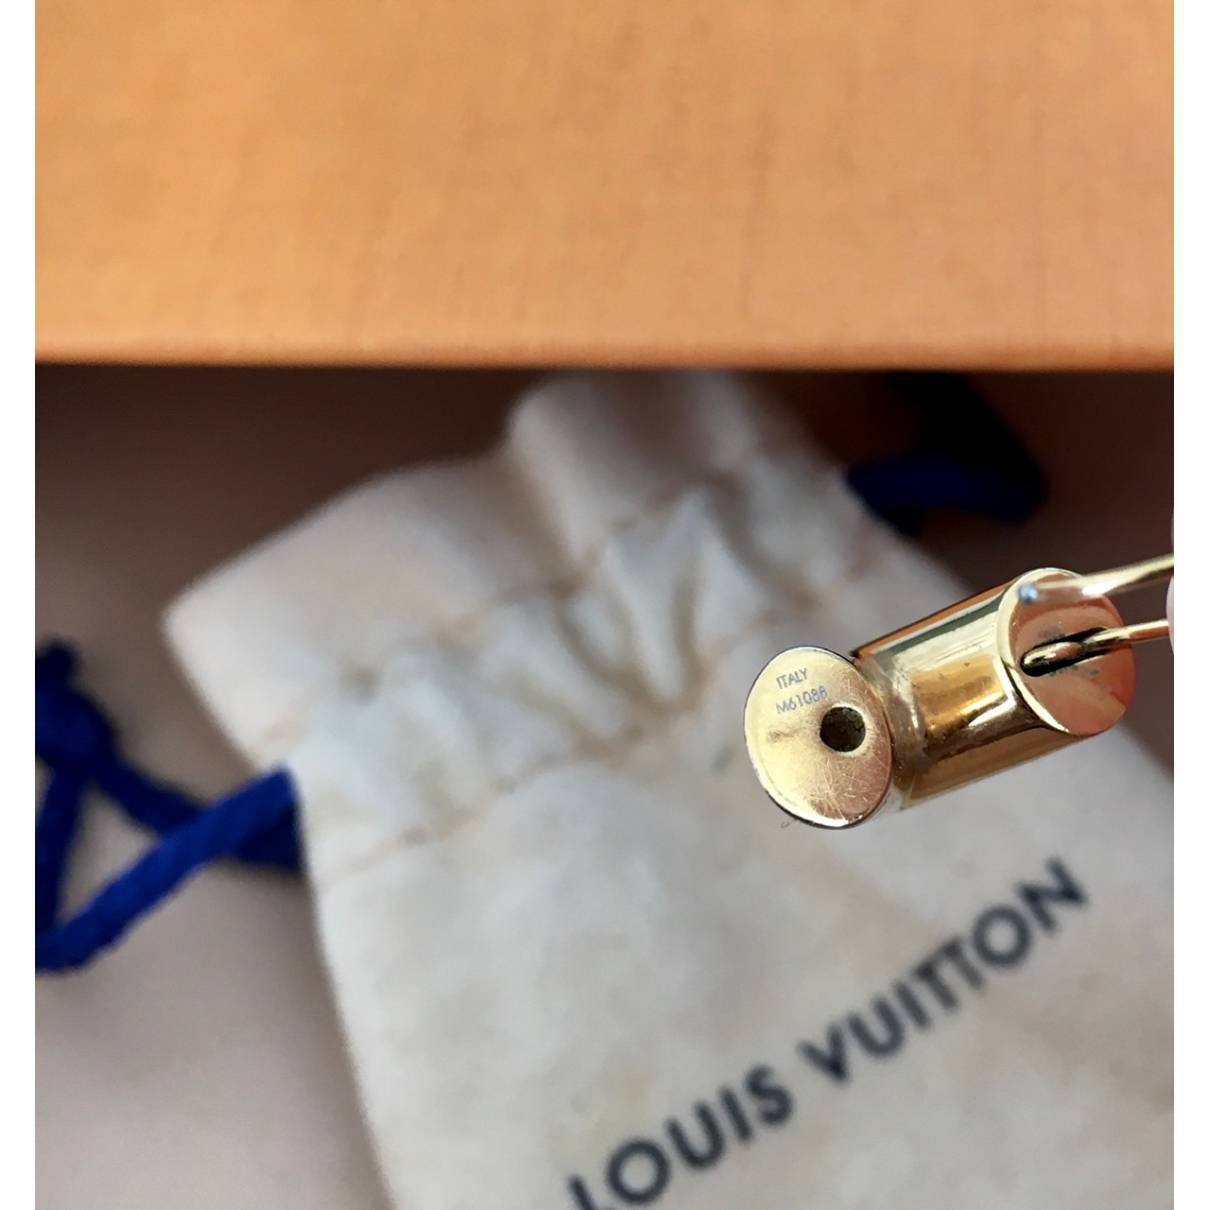 LOUIS VUITTON Essential V Hoop Earrings M61088 Gold Women's